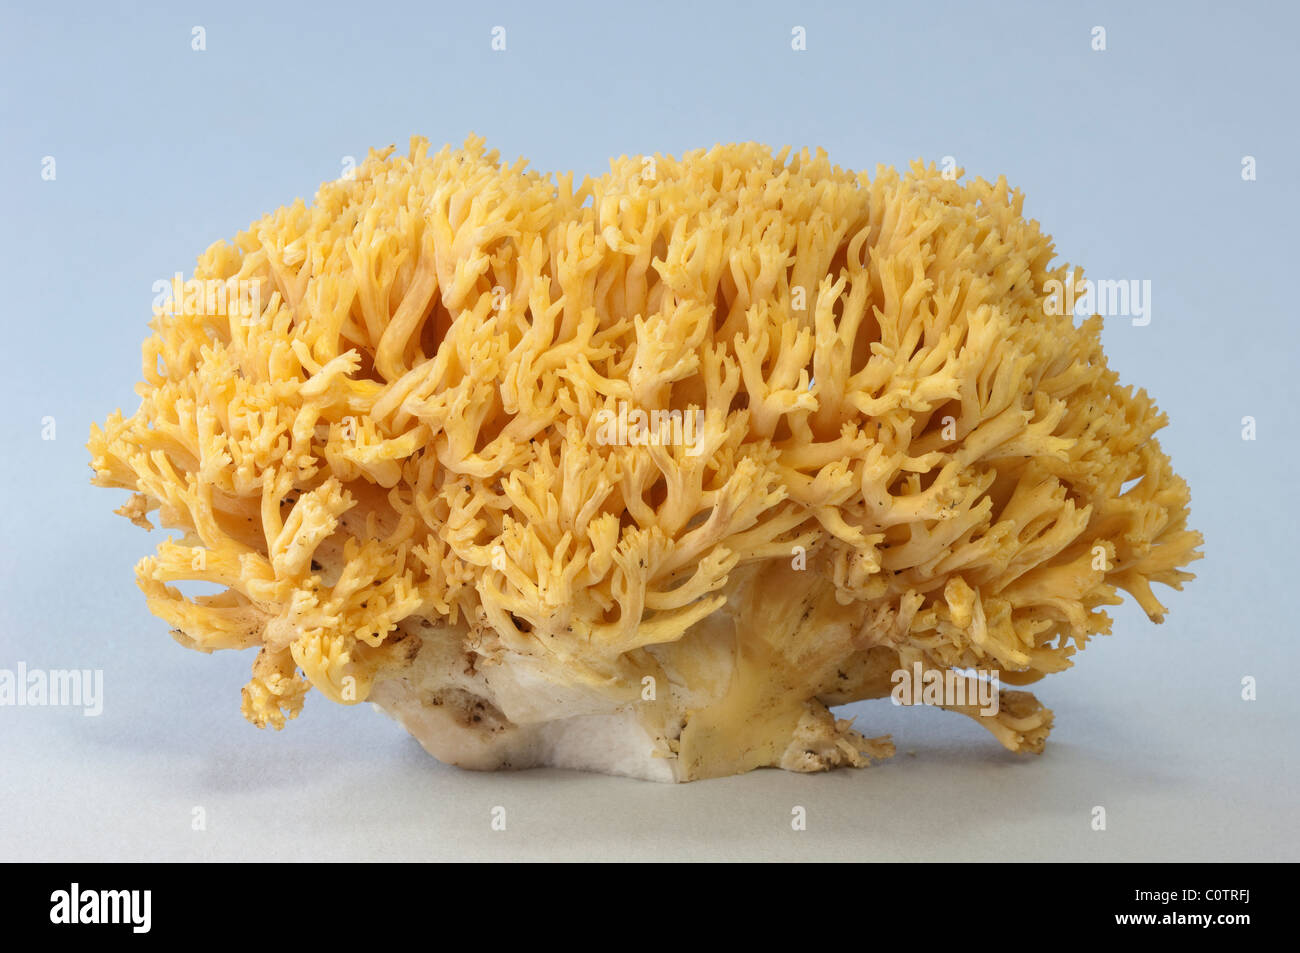 Golden Coral Fungus (Ramaria aurea), fruiting body, studio picture against a white background. Stock Photo